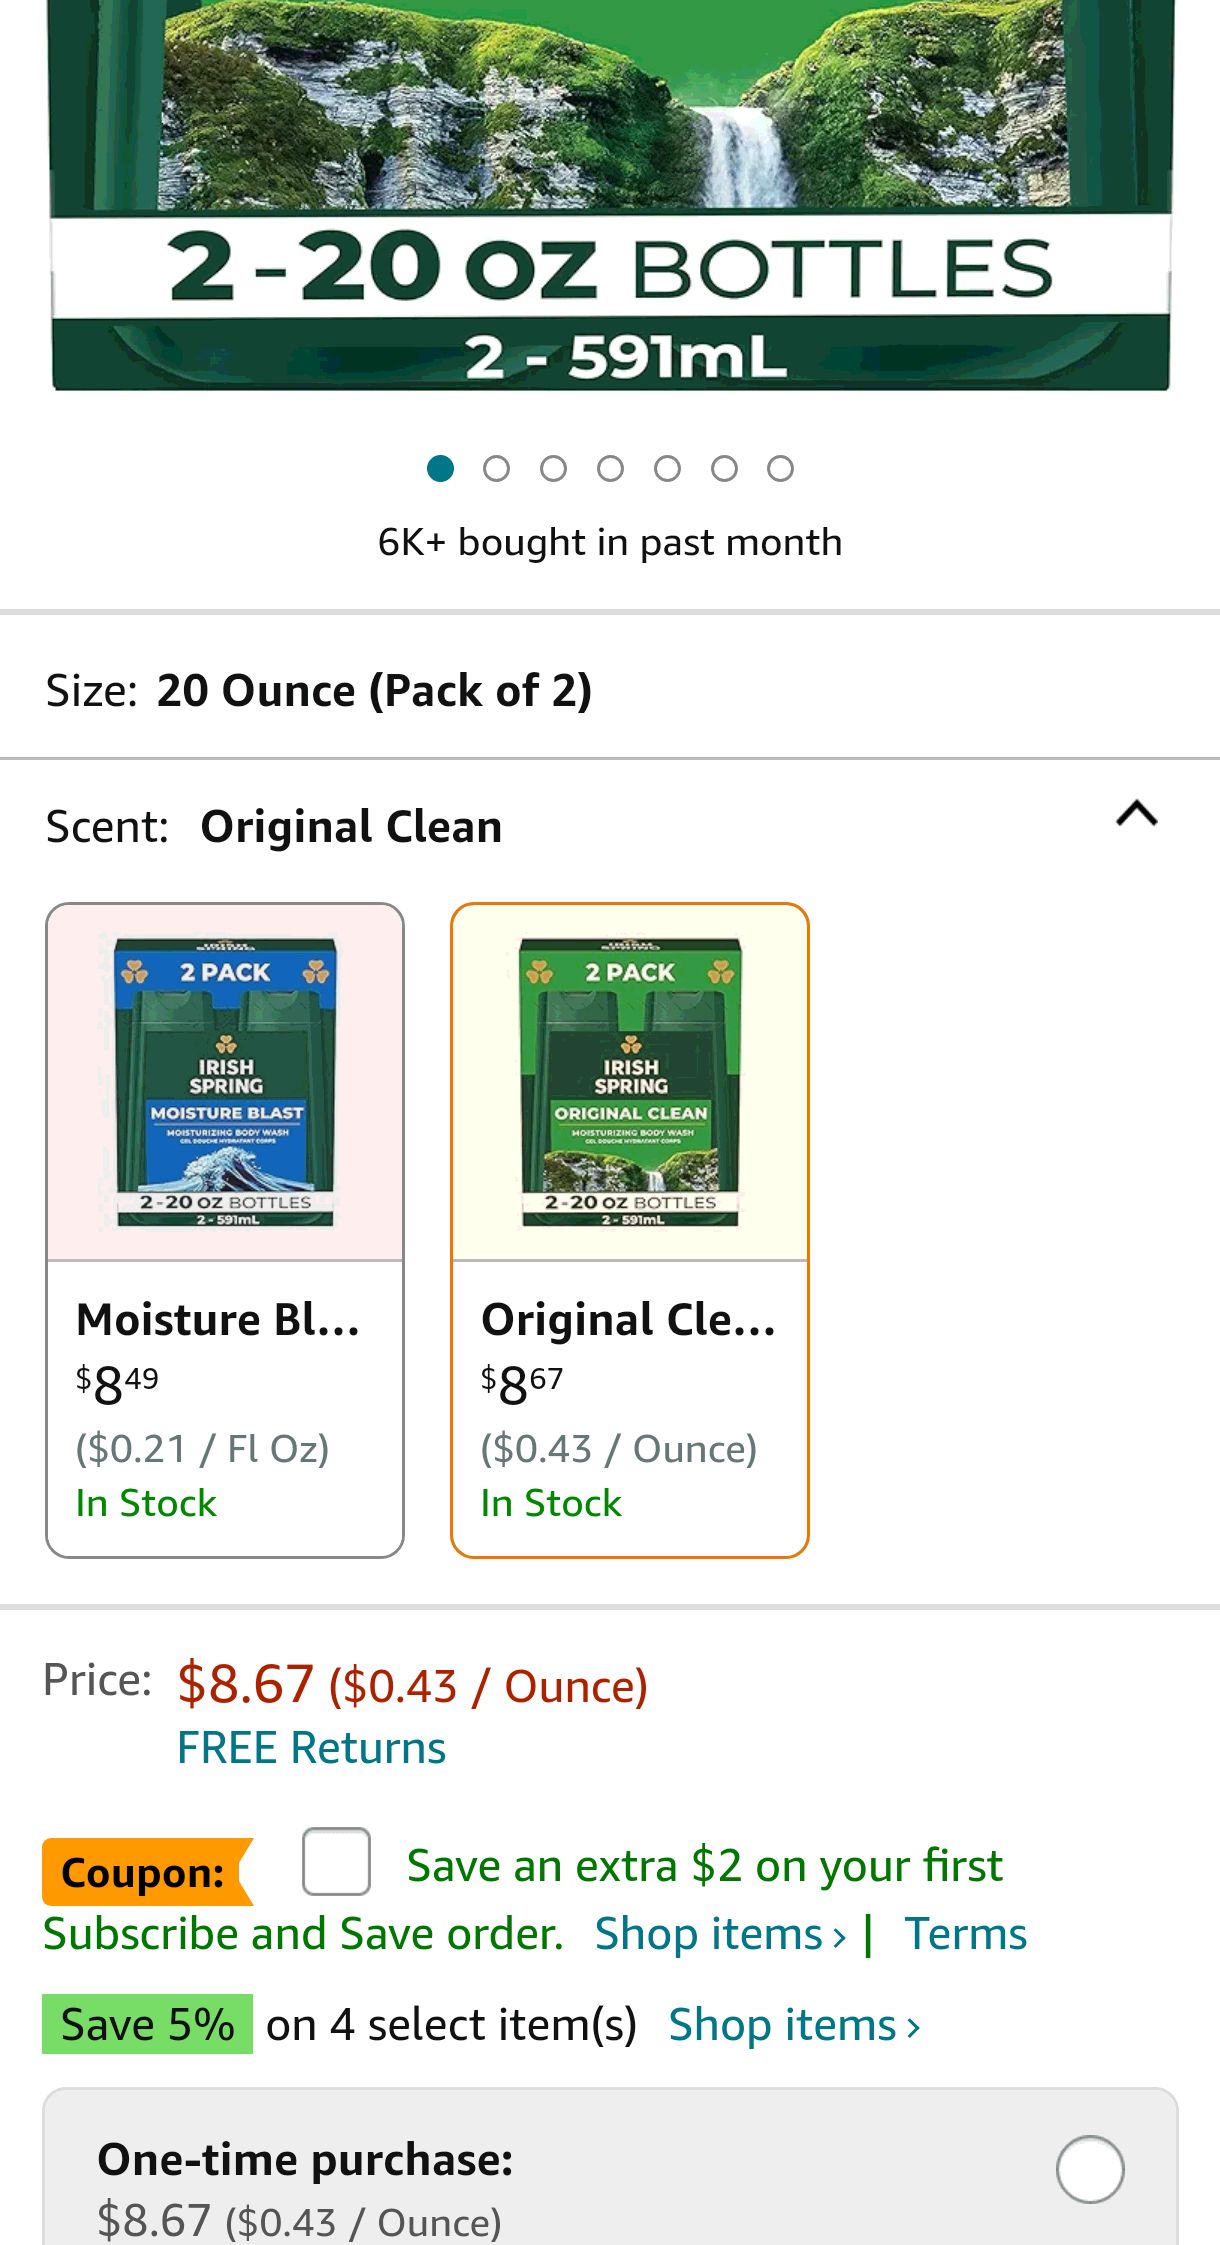 Amazon.com : Irish Spring Original Clean Body Wash, 20 Oz, 2 Pack : Beauty & Personal Care